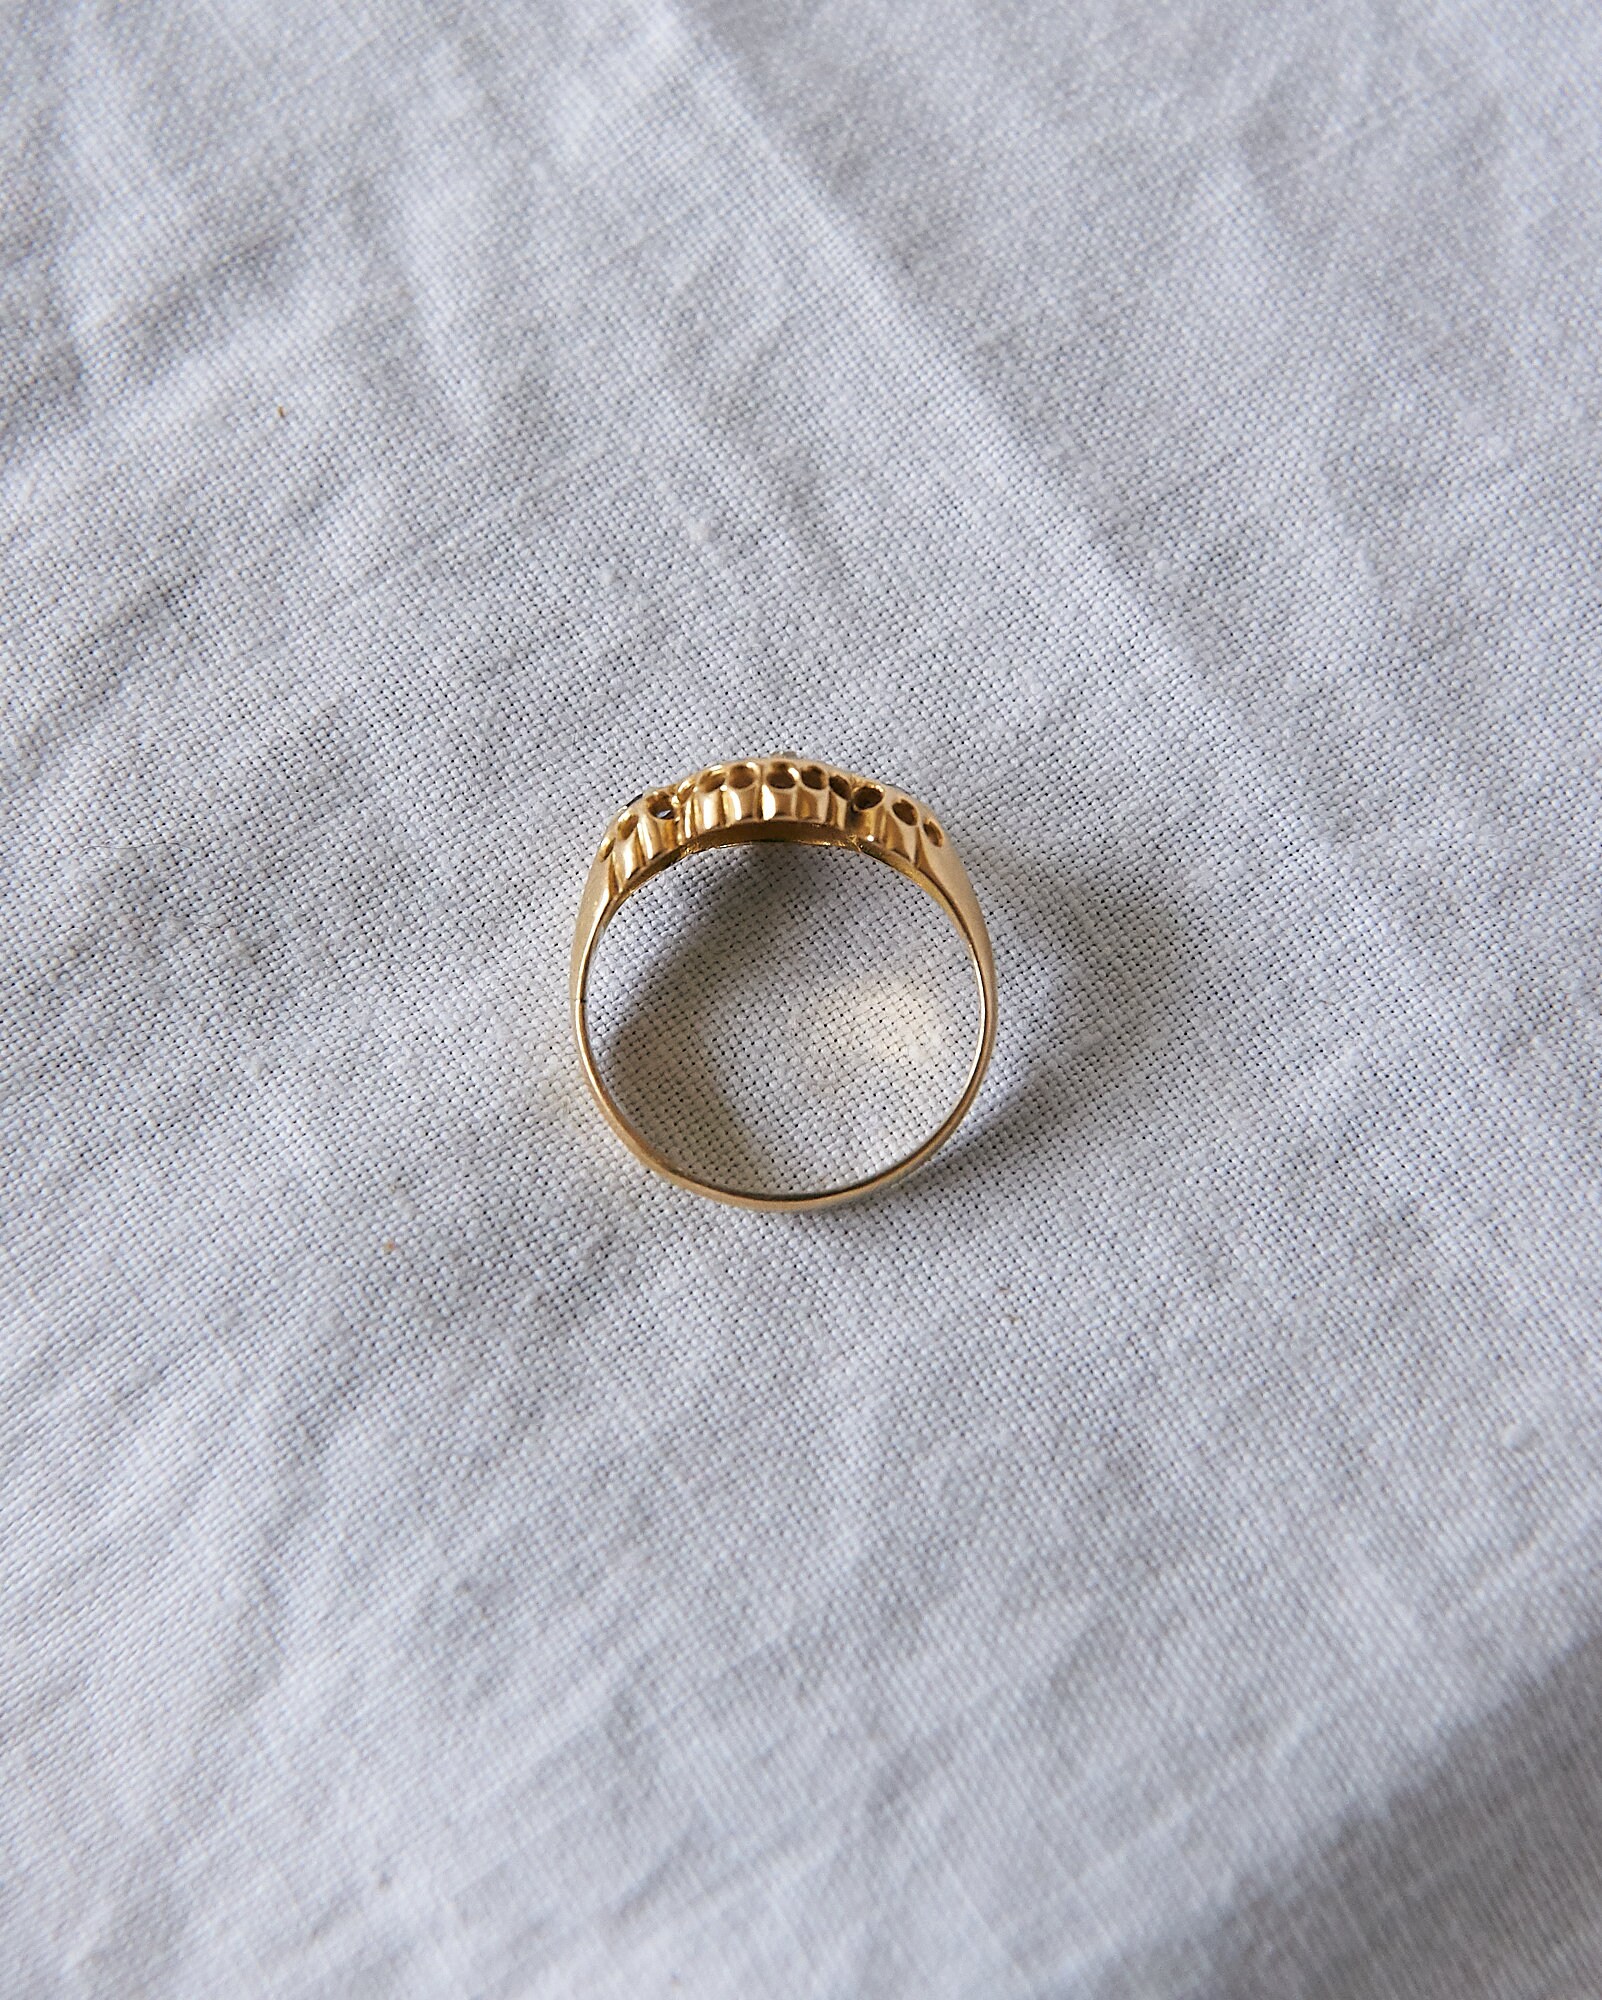 Sapphire & Diamond 18ct Gold Ring - Etsy Ireland